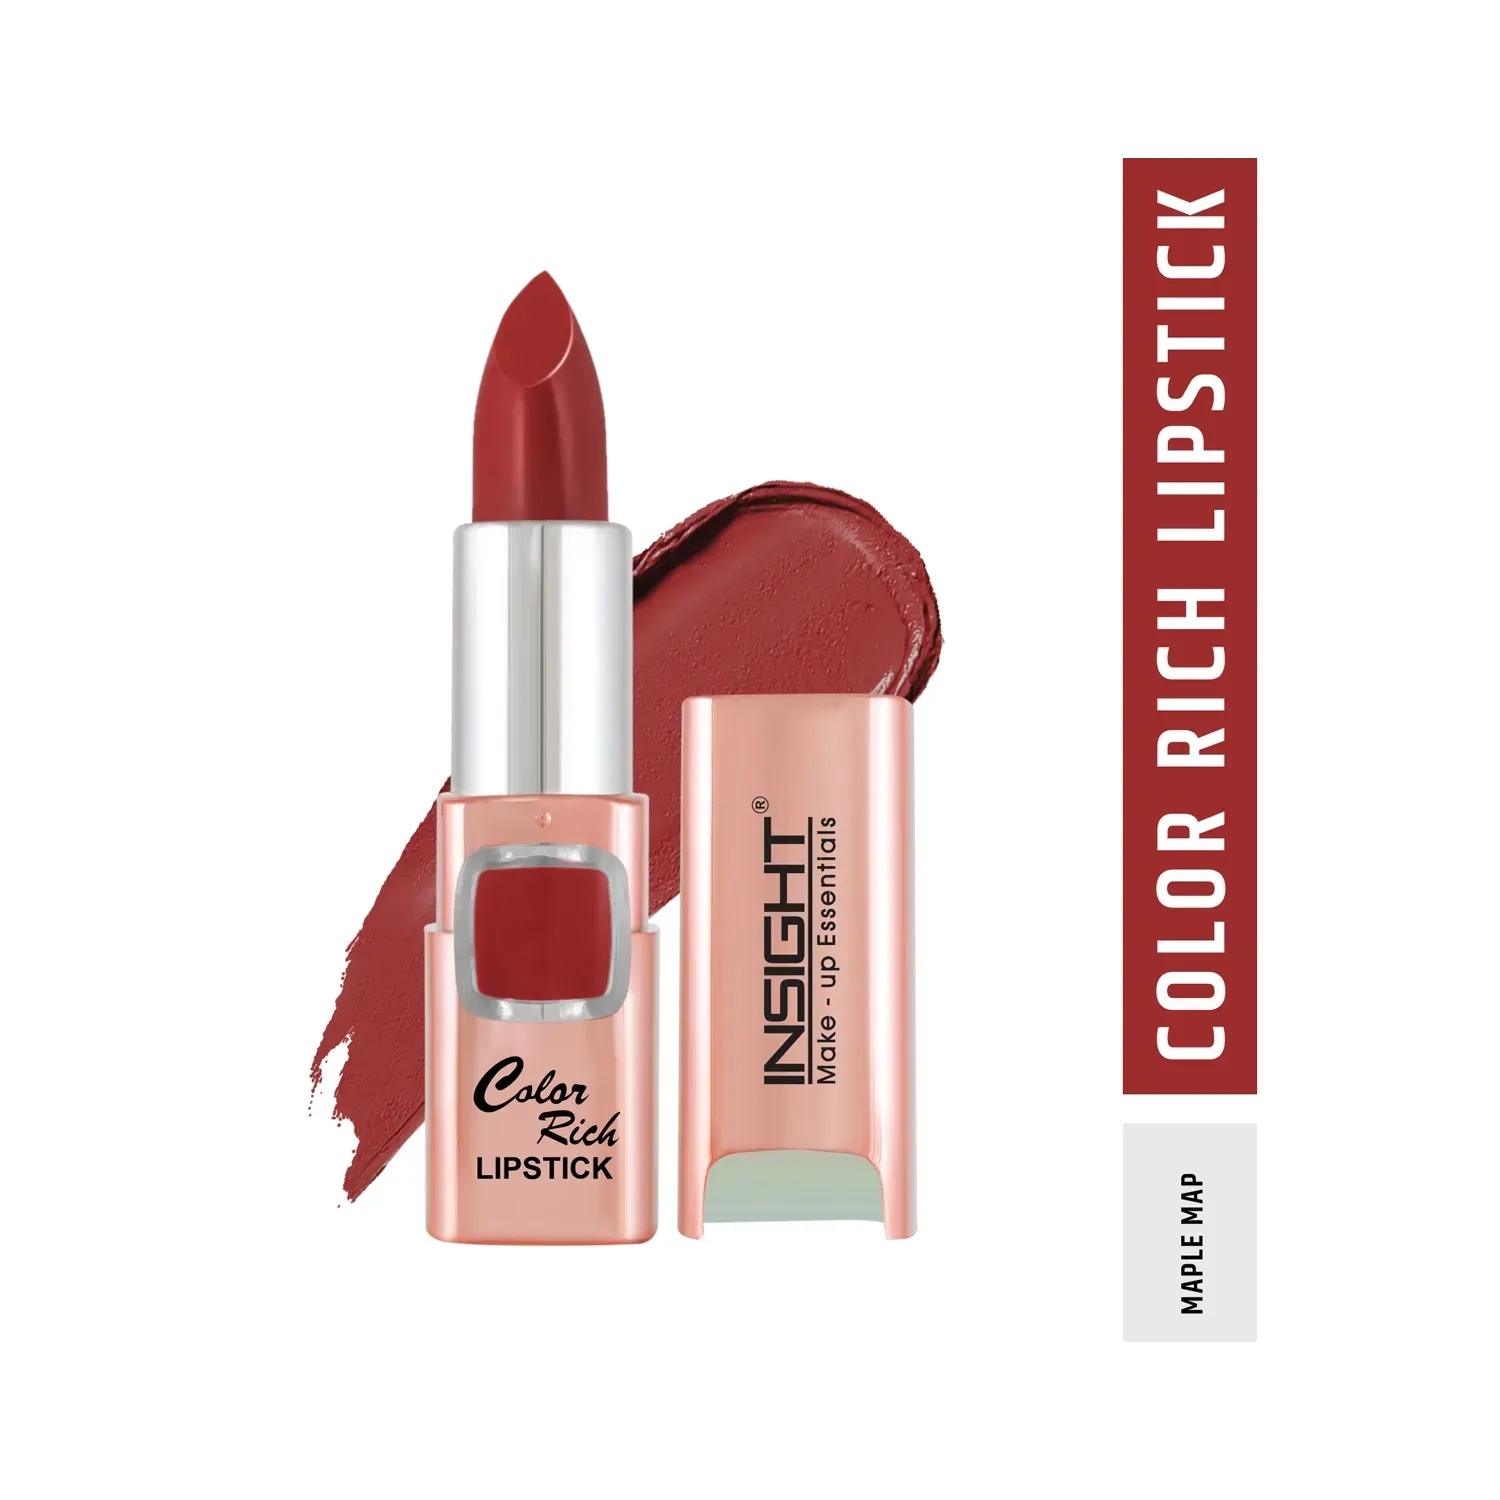 Insight Cosmetics | Insight Cosmetics Color Rich Lipstick - Maple Map (4.2g)